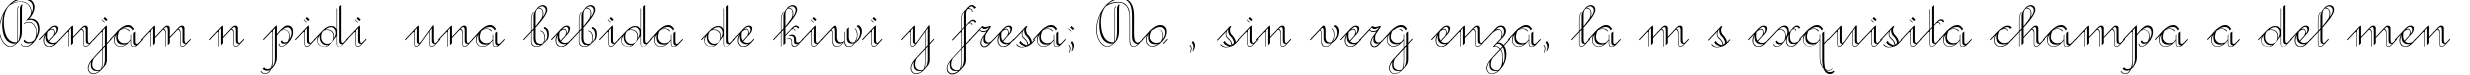 Пример написания шрифтом Rondo Twin Thin текста на испанском